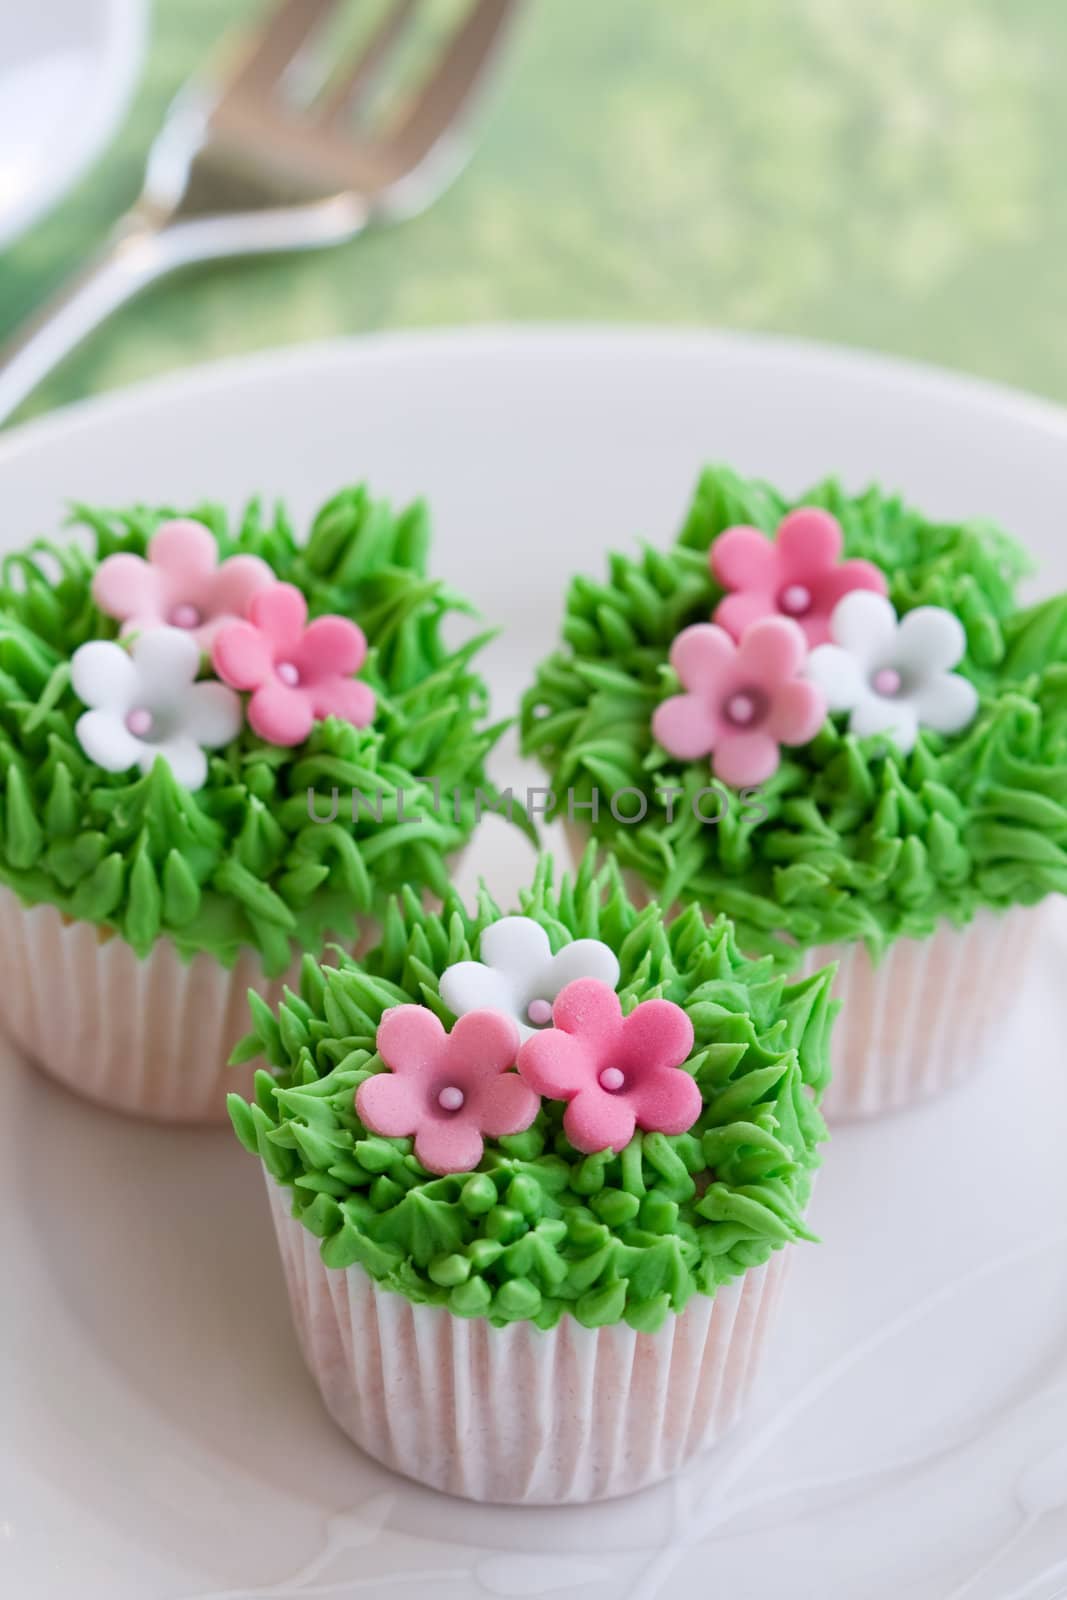 Flower garden cakes by RuthBlack